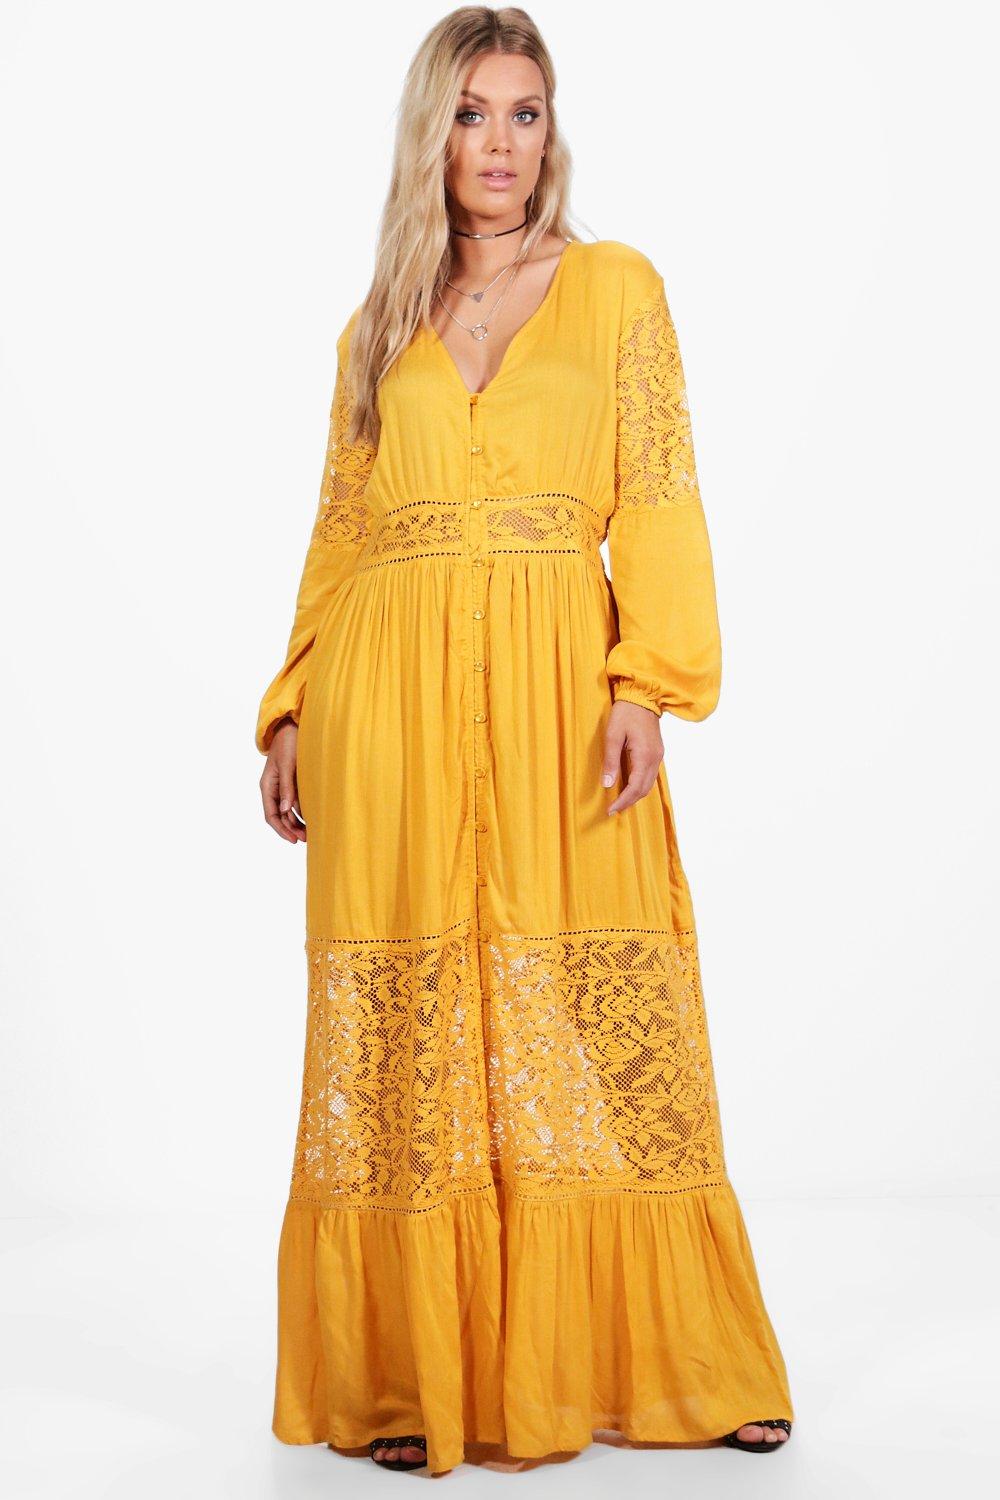 Plus Size Retro Dresses 50s, 60s ,70s, 80s, 90s Womens Plus Boho Lace Insert Maxi Dress - Yellow - 16 $55.00 AT vintagedancer.com